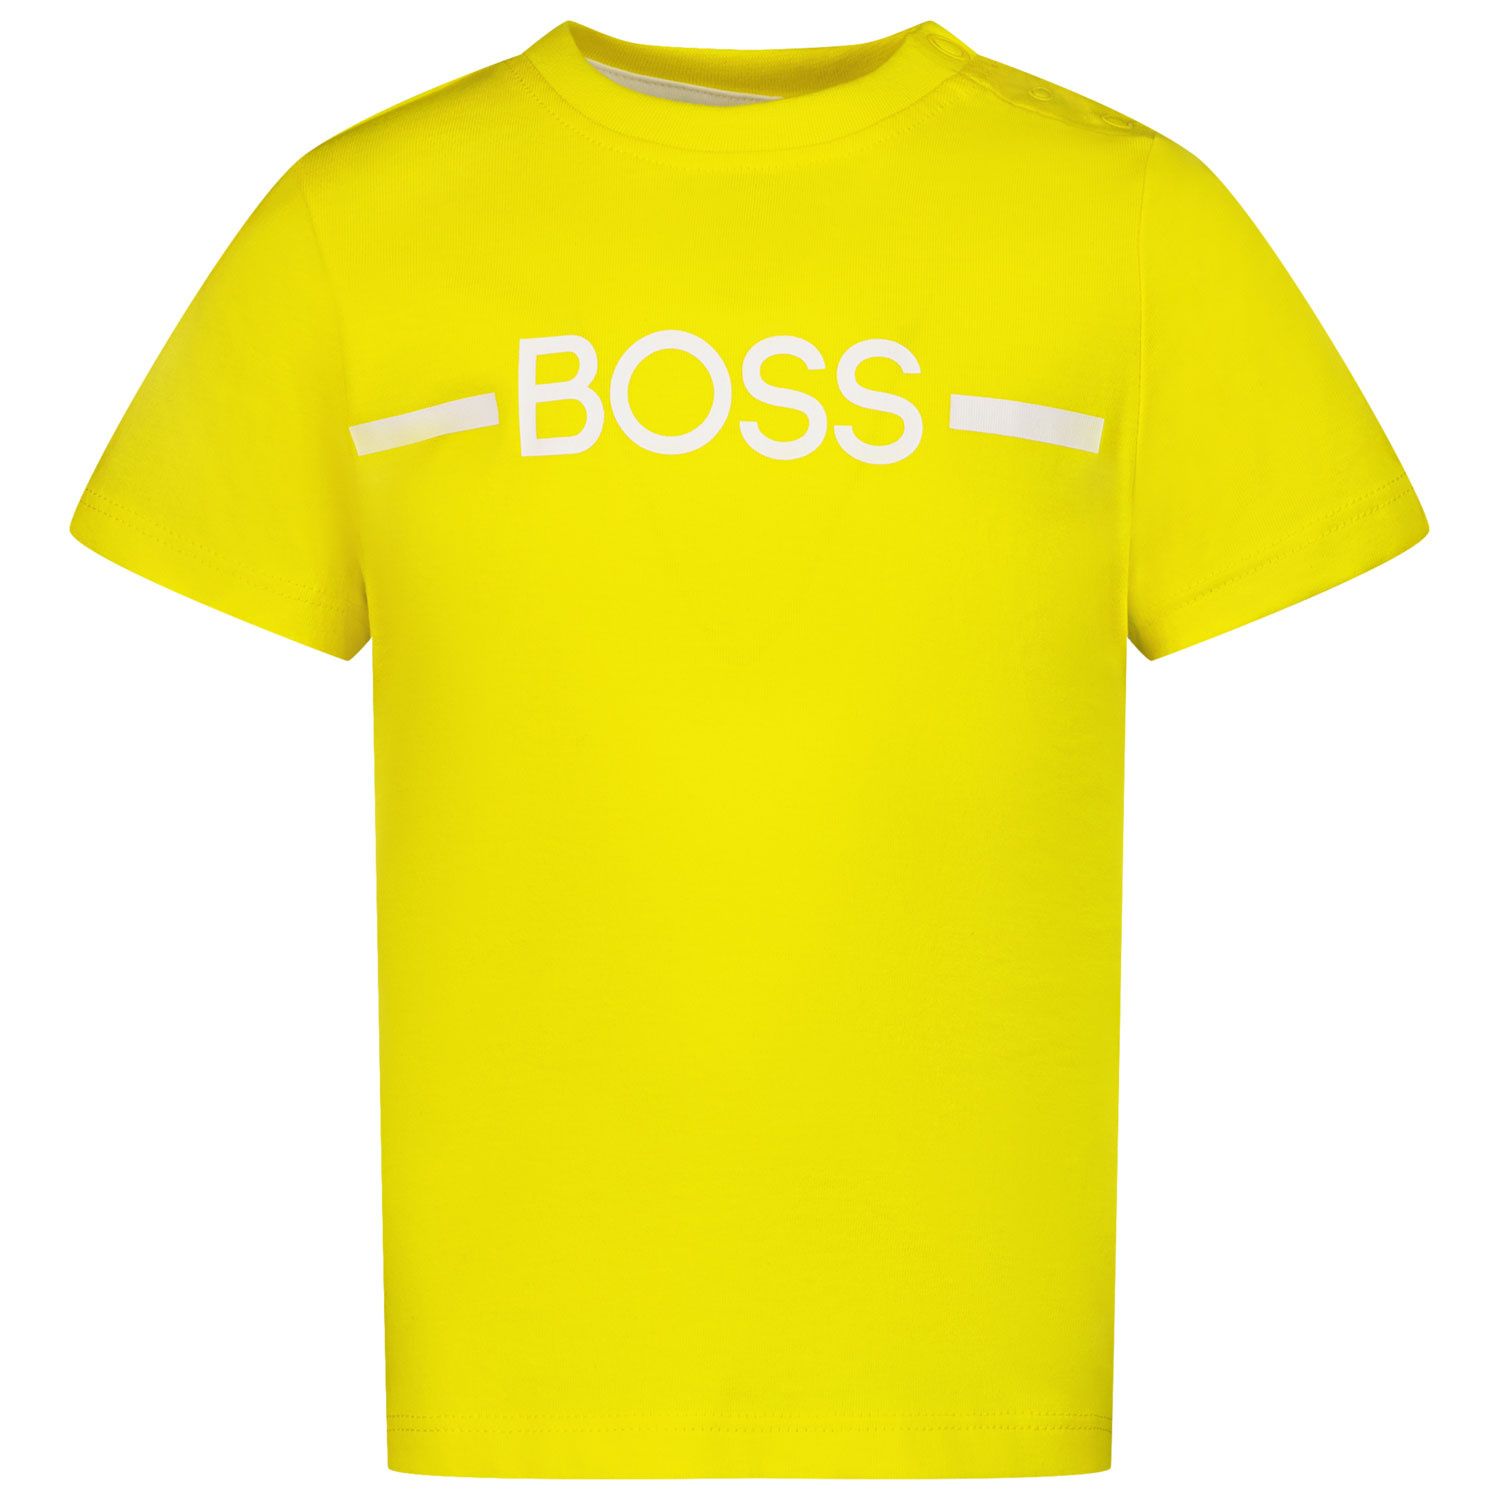 Picture of Boss J05908 baby shirt yellow